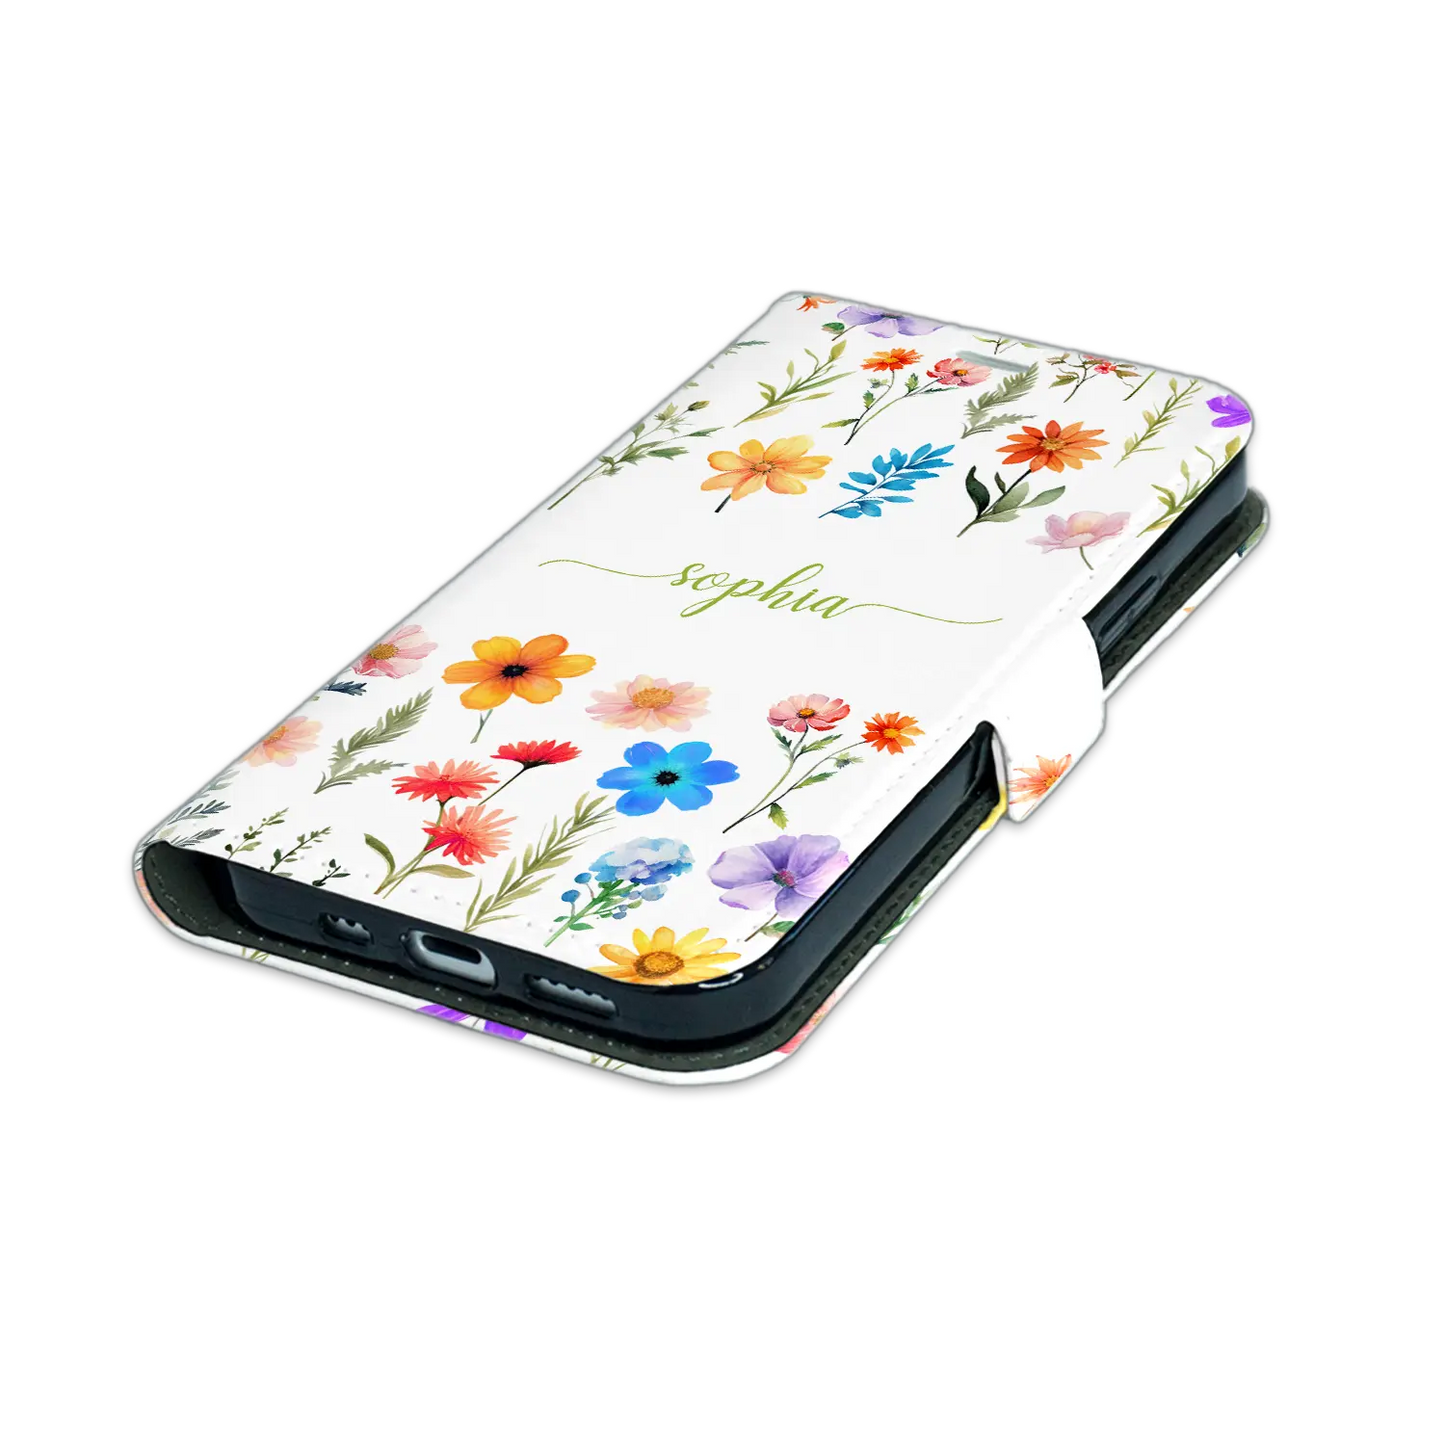 Fleurs - Coque Galaxy S personnalisé